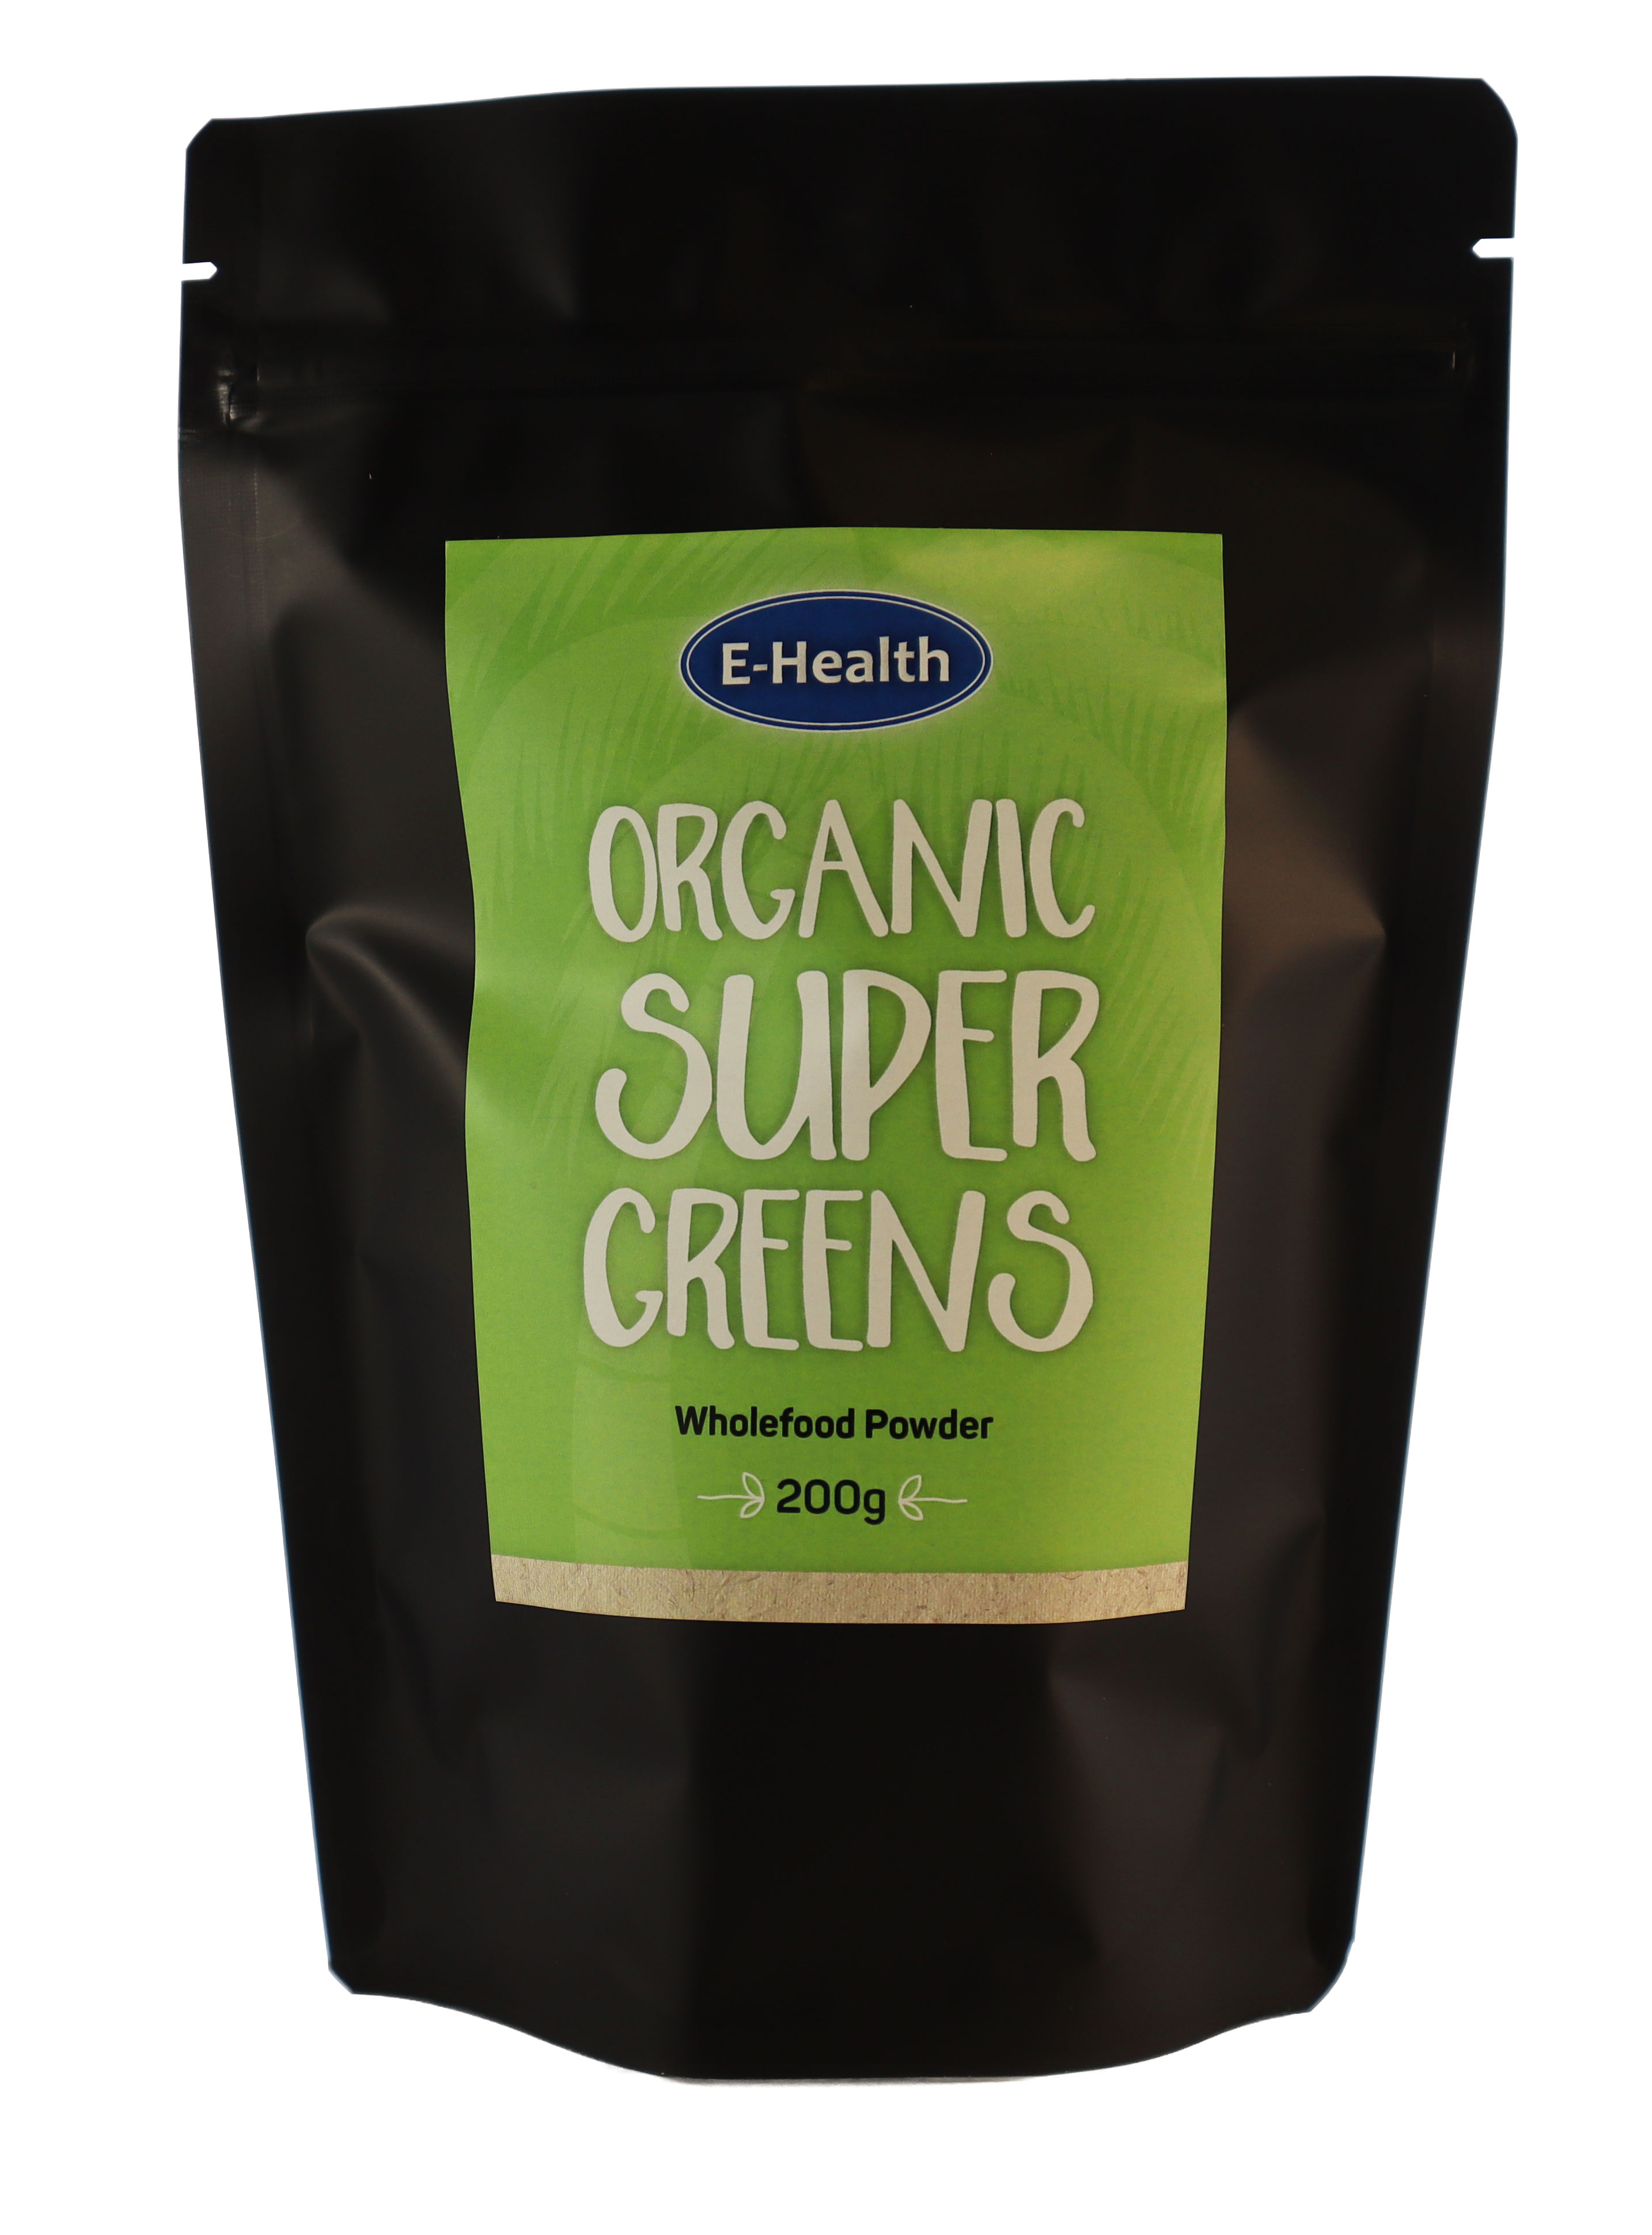 E-Health brand Organic Super Greens Wholefood Powder (200g)